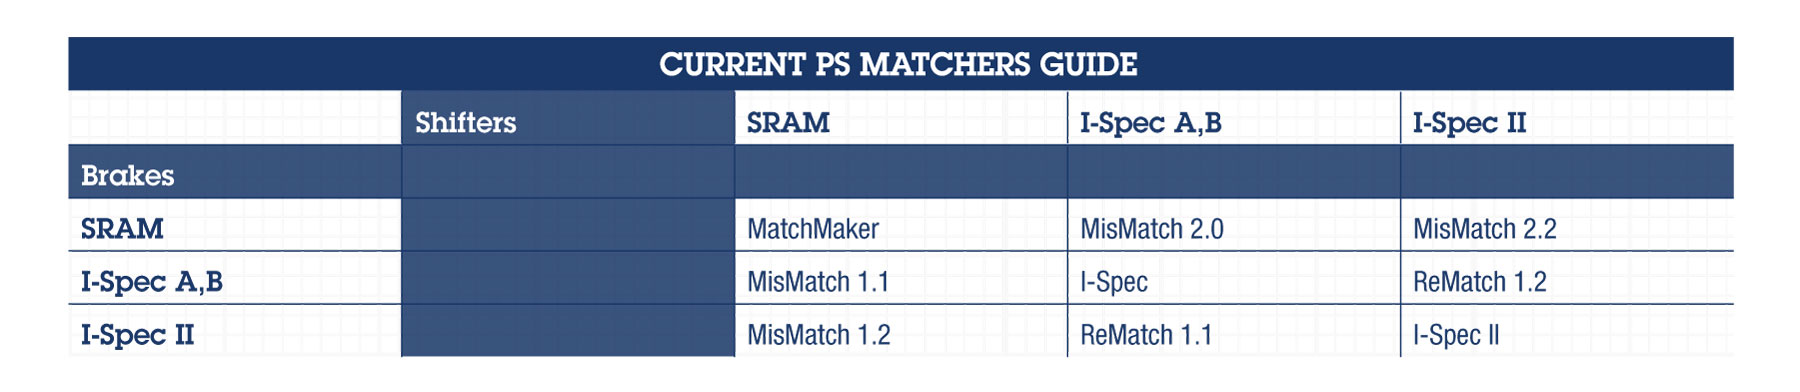 Problem Solvers simplifies match making w/ MisMatch, ReMatch compatibility charts